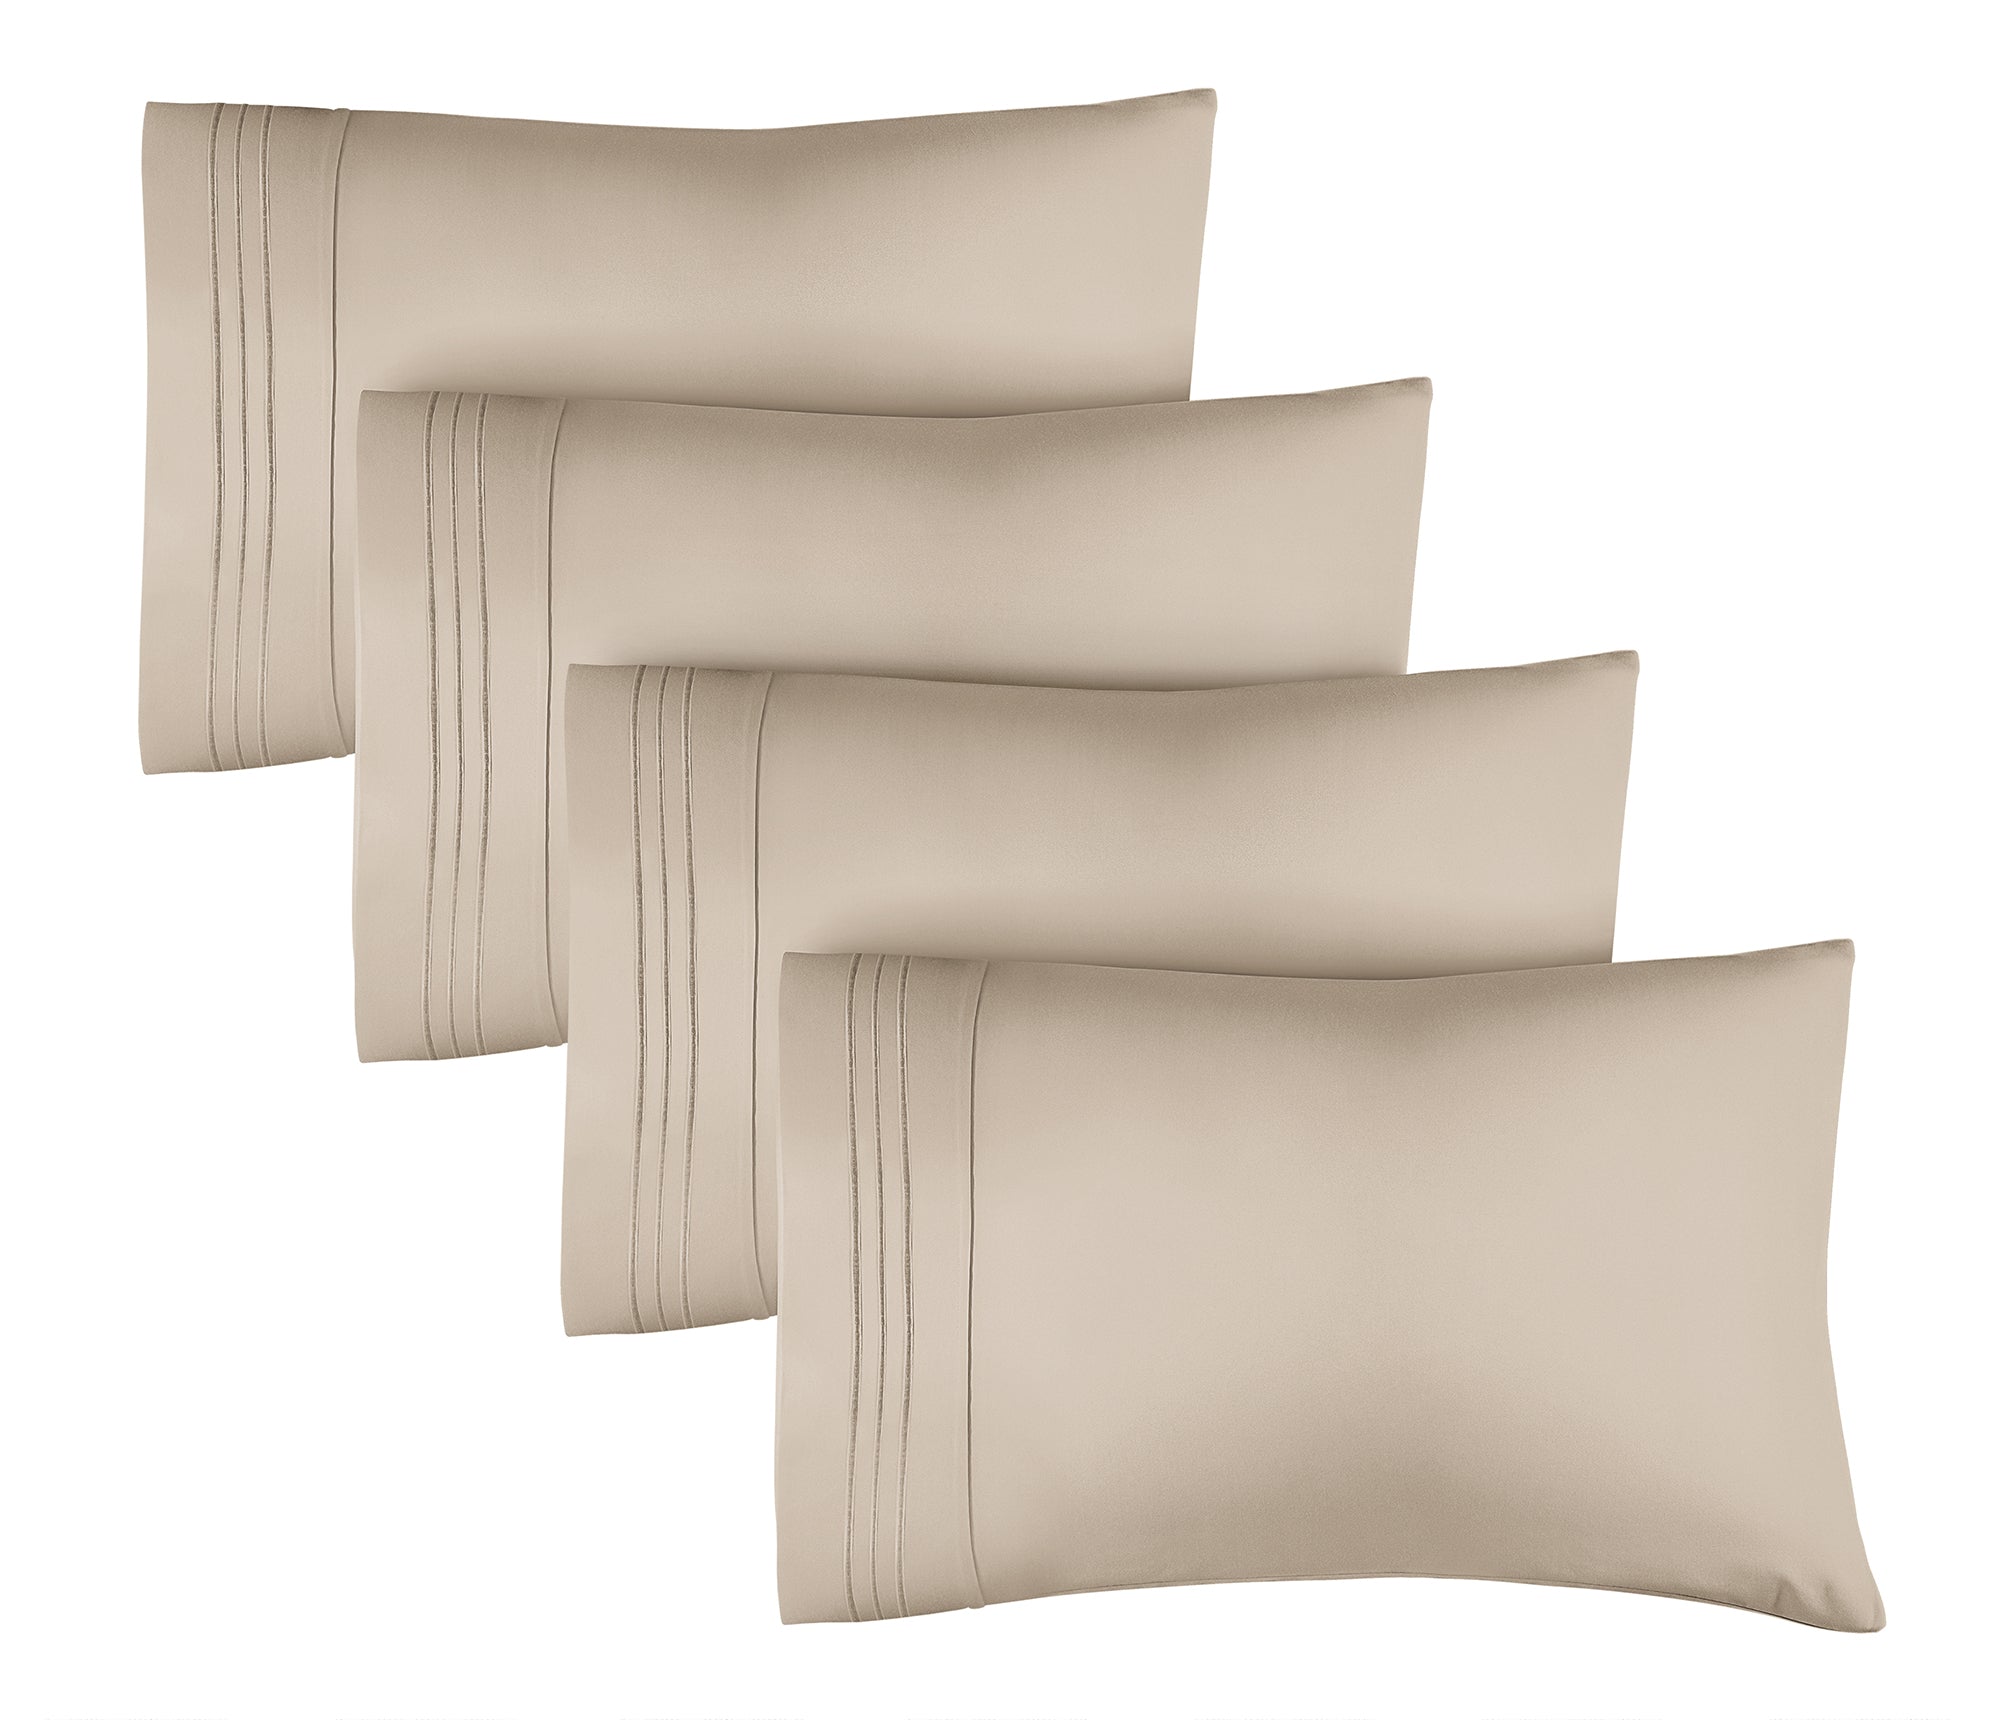  Empyrean Bedding Pillow Cases Standard Size - Soft Pillow Cases  Queen - Pillow Cases Standard Size Set of 4 - Queen Pillow Cases Set of 4 -  Queen Pillowcases Standard Size - Teal Blue : Everything Else